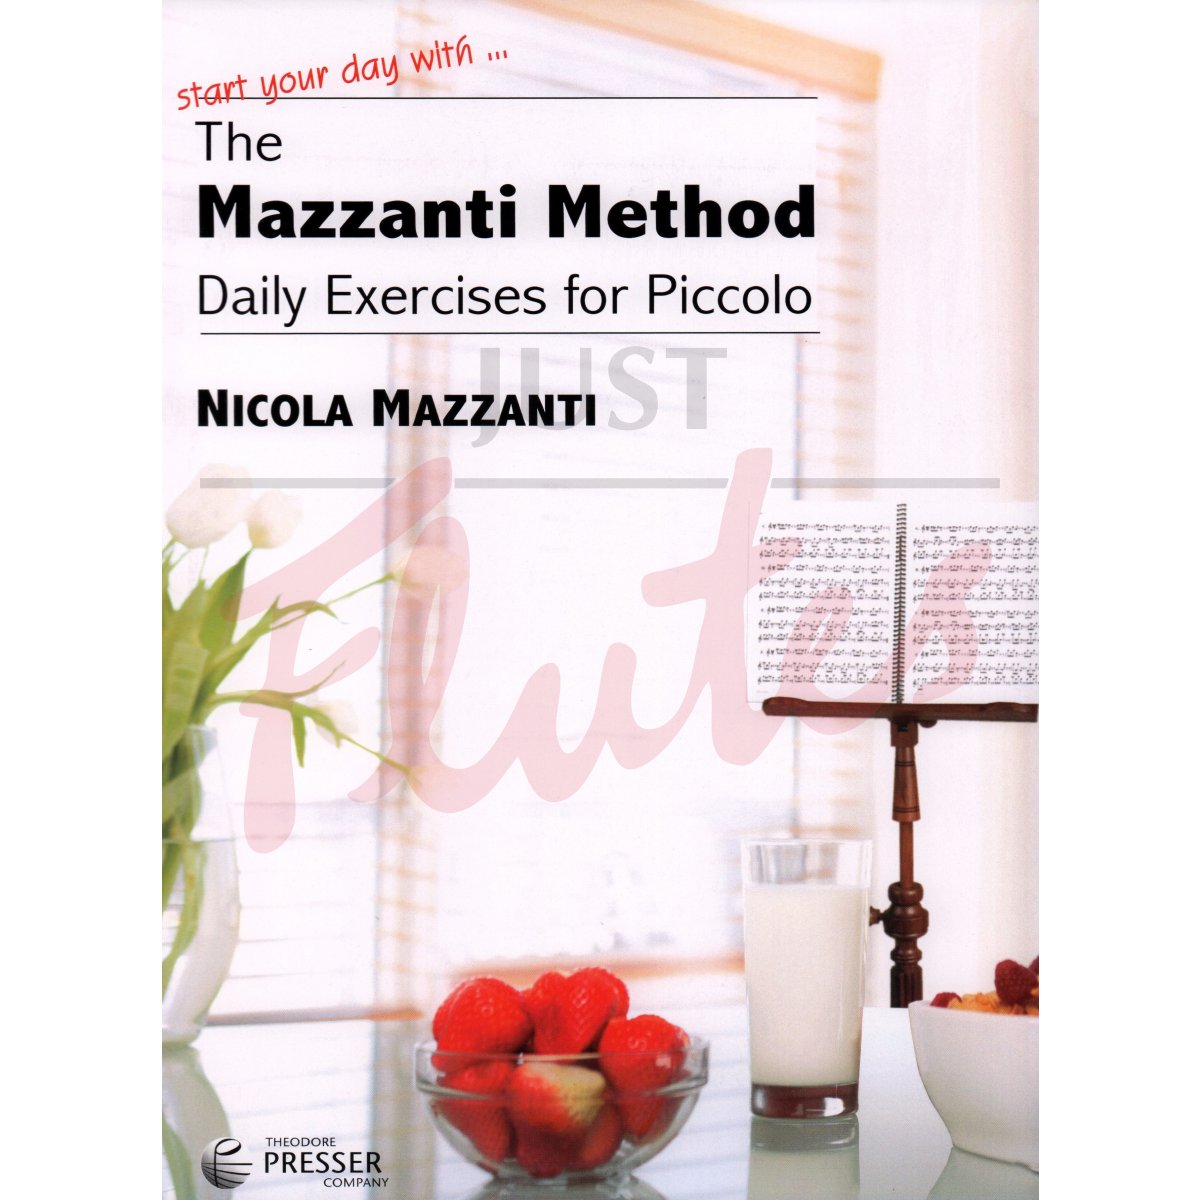 The Mazzanti Method: Daily Exercises for Piccolo